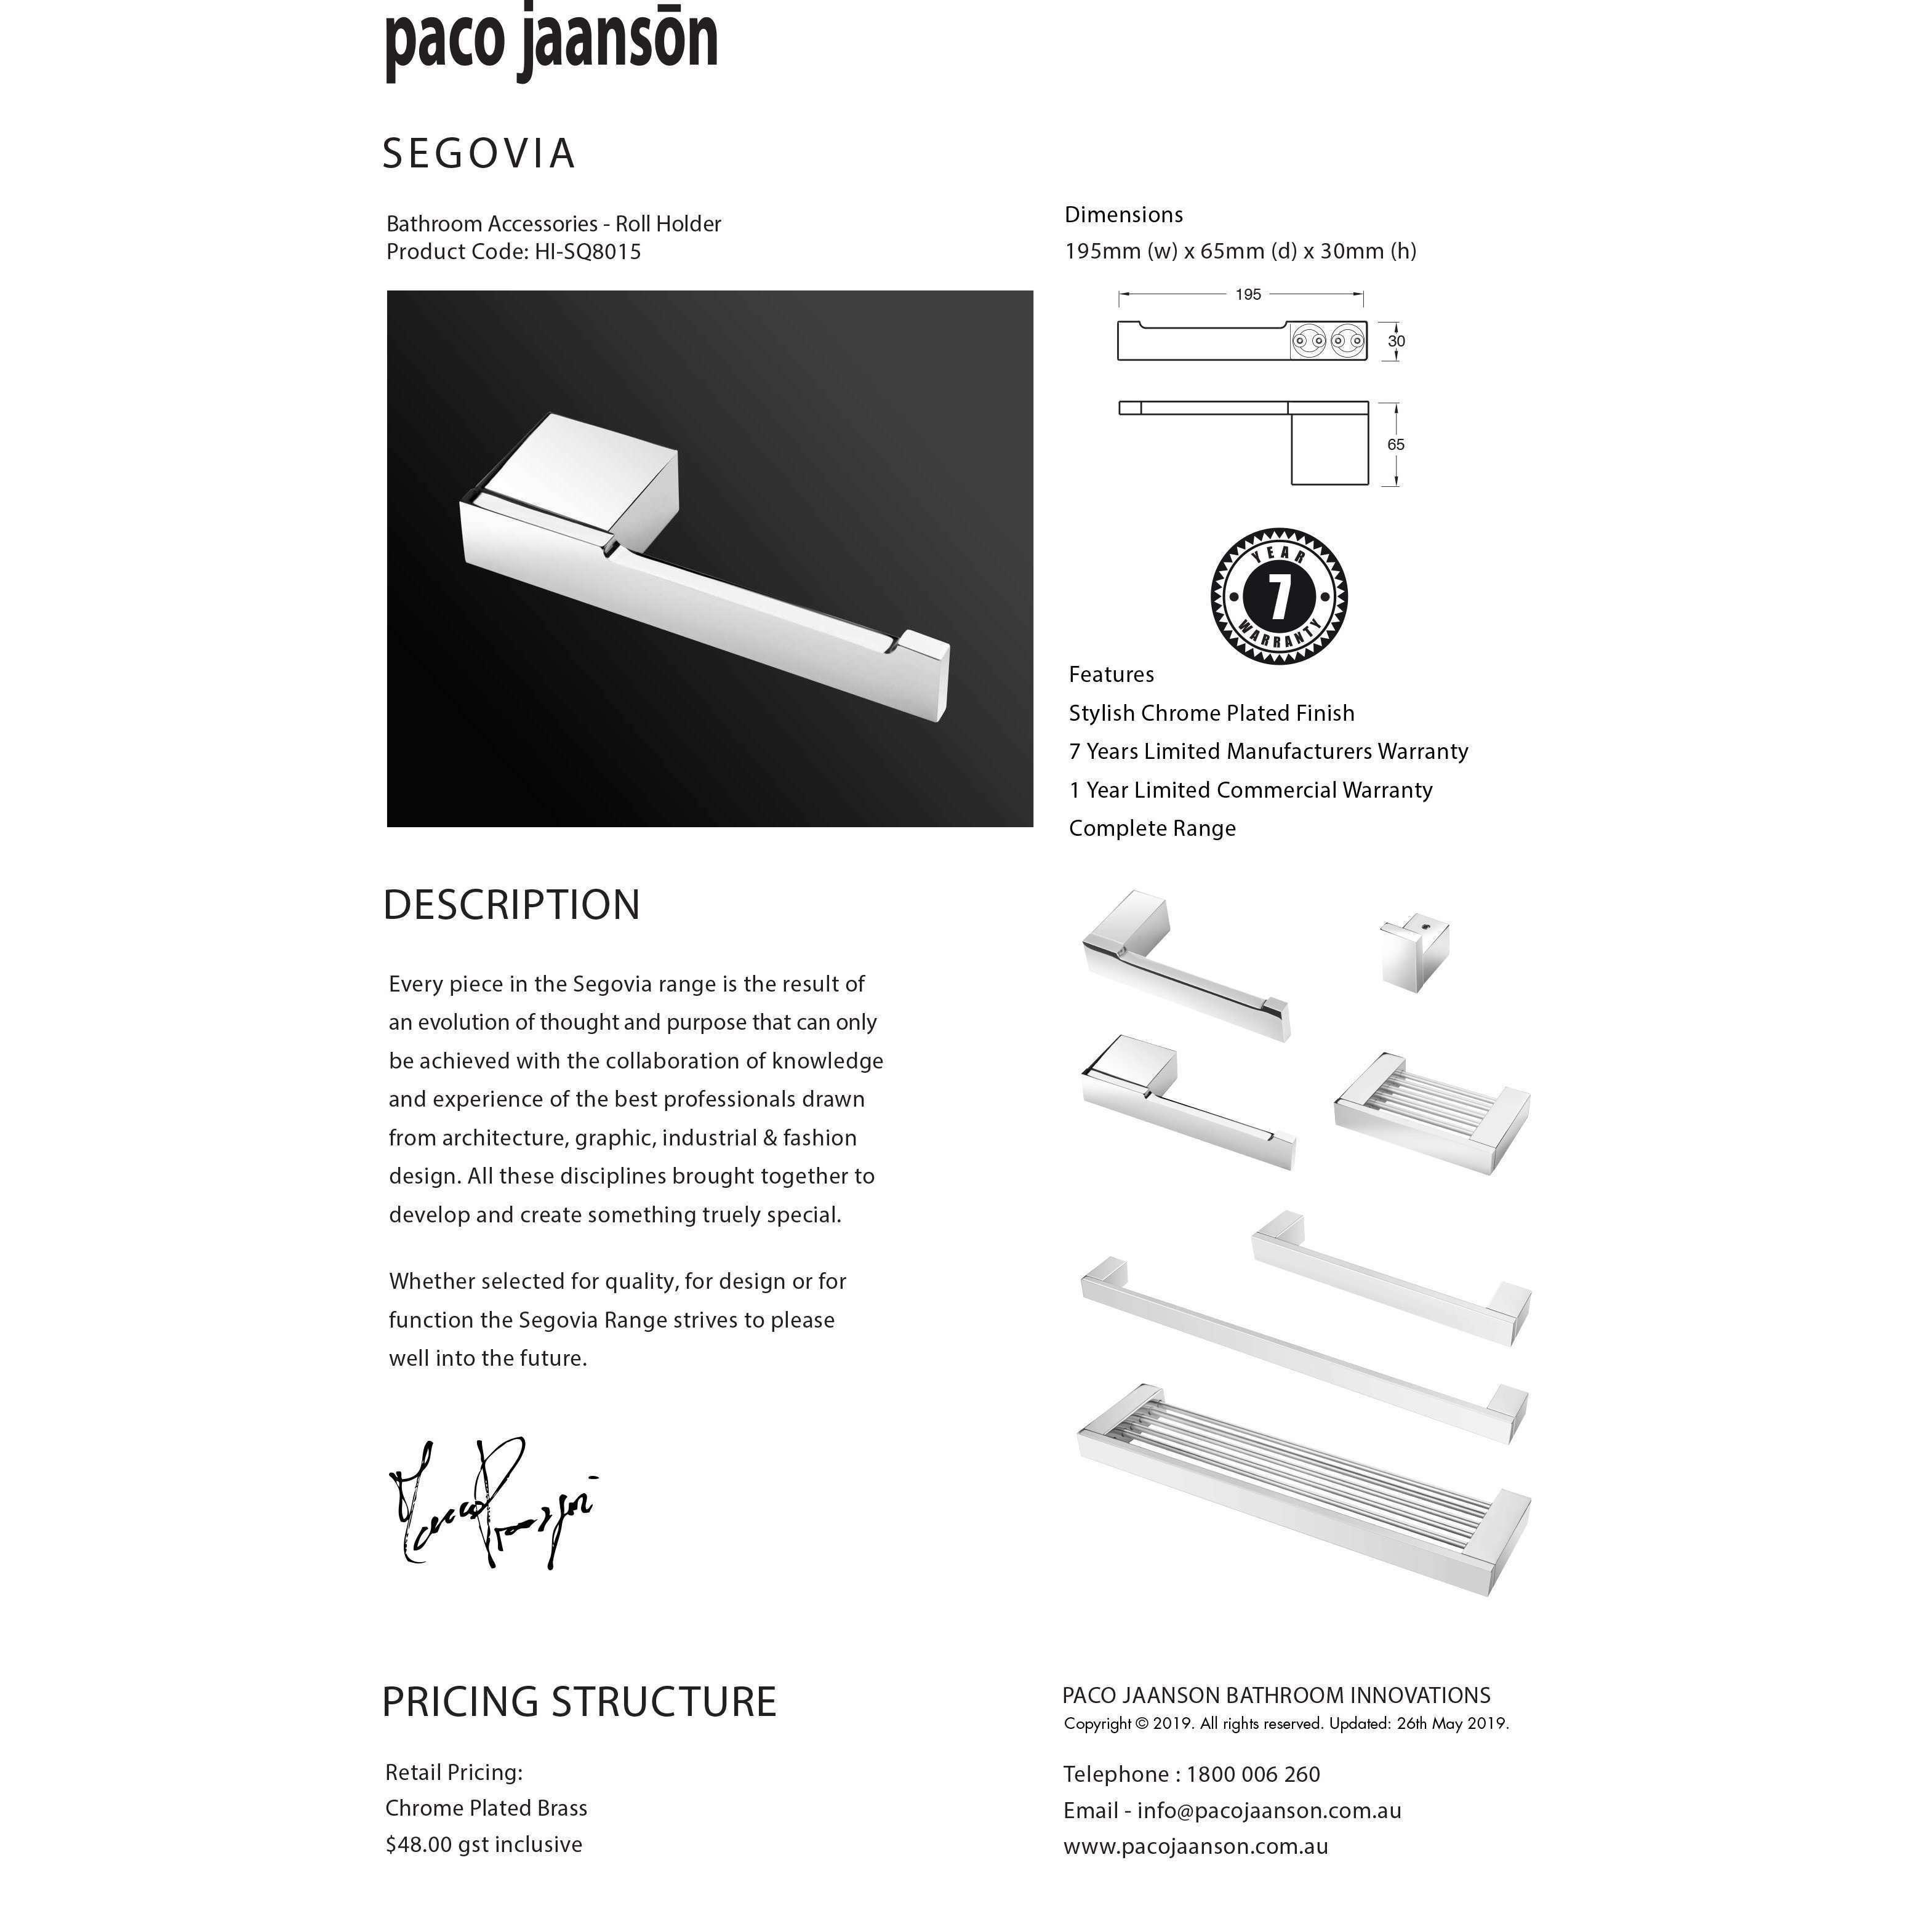 Paco Jaanson Segovia Double Fix Toilet Roll Holder Hi-Sq8015 - Burdens Plumbing